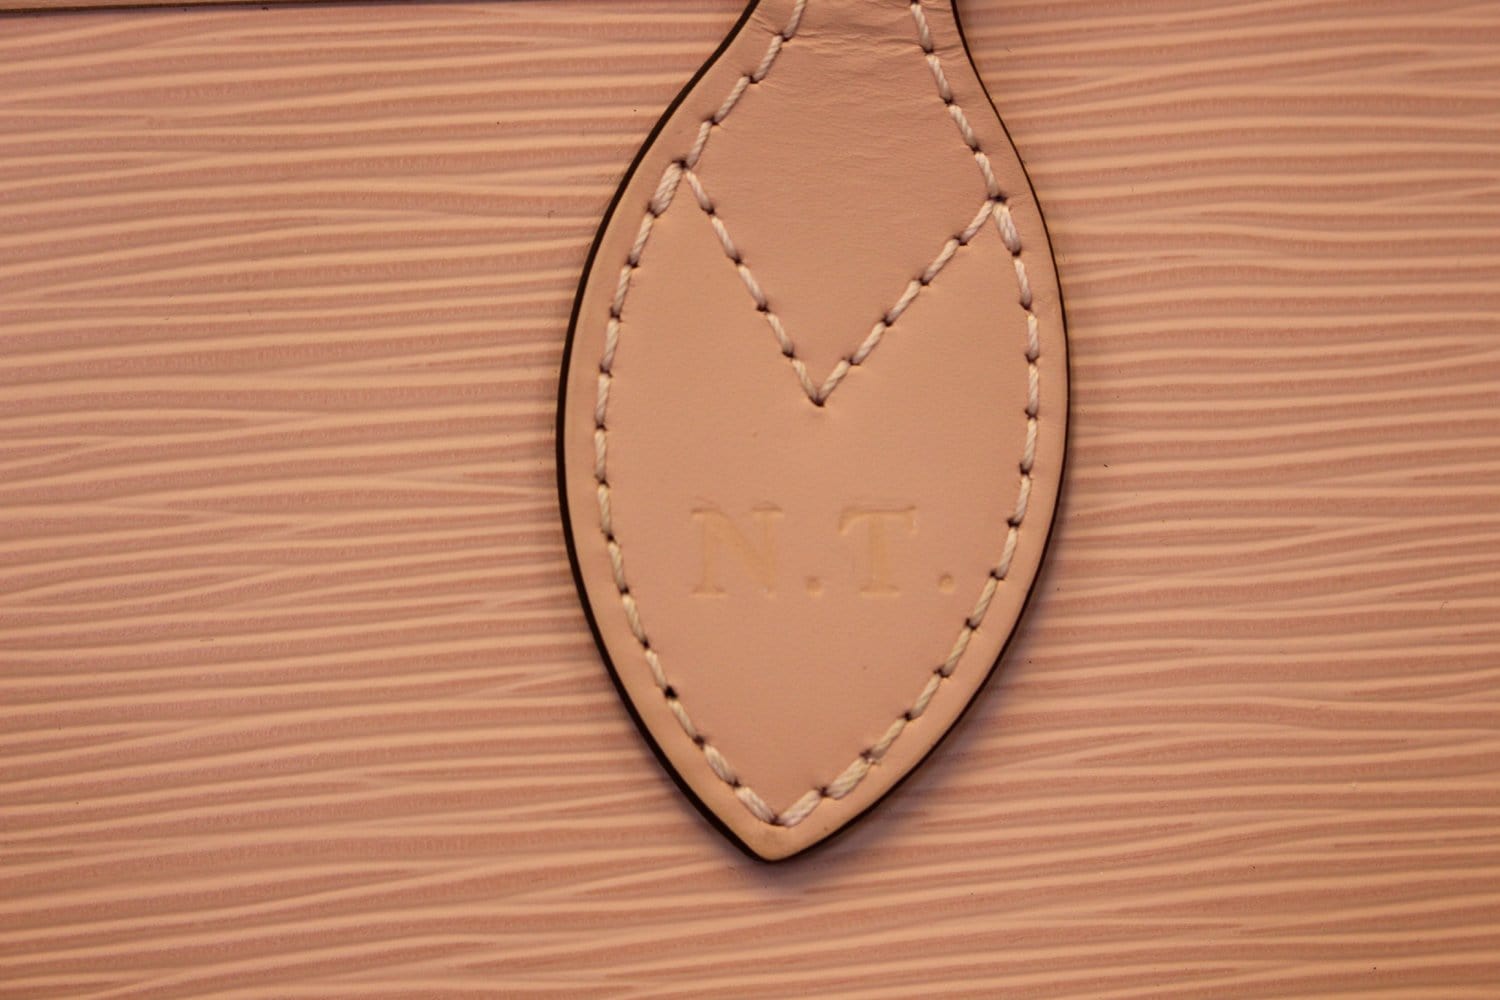 68056 auth LOUIS VUITTON Grenat pink Epi leather NEVERFULL MM Shopper Bag